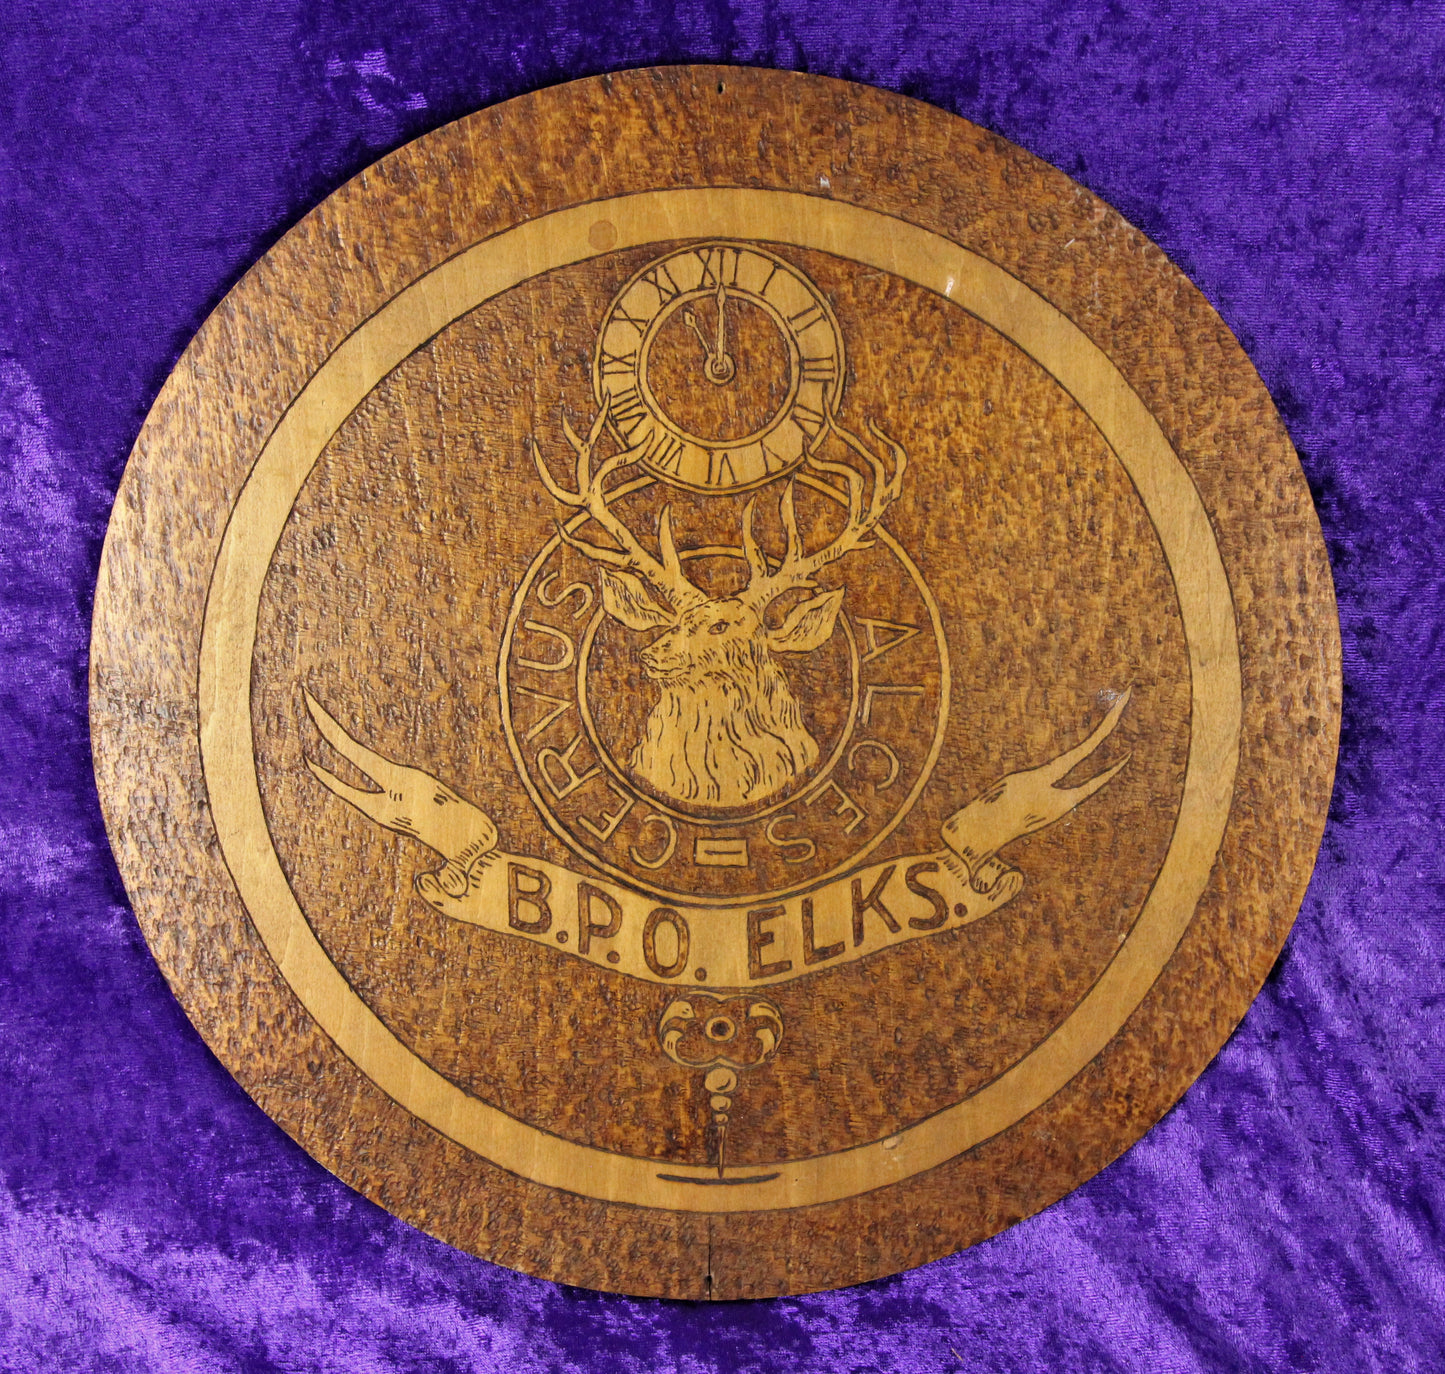 Benevolent Protective Order of Elks BPOE Circular Pyrography Flemish Art, 16"